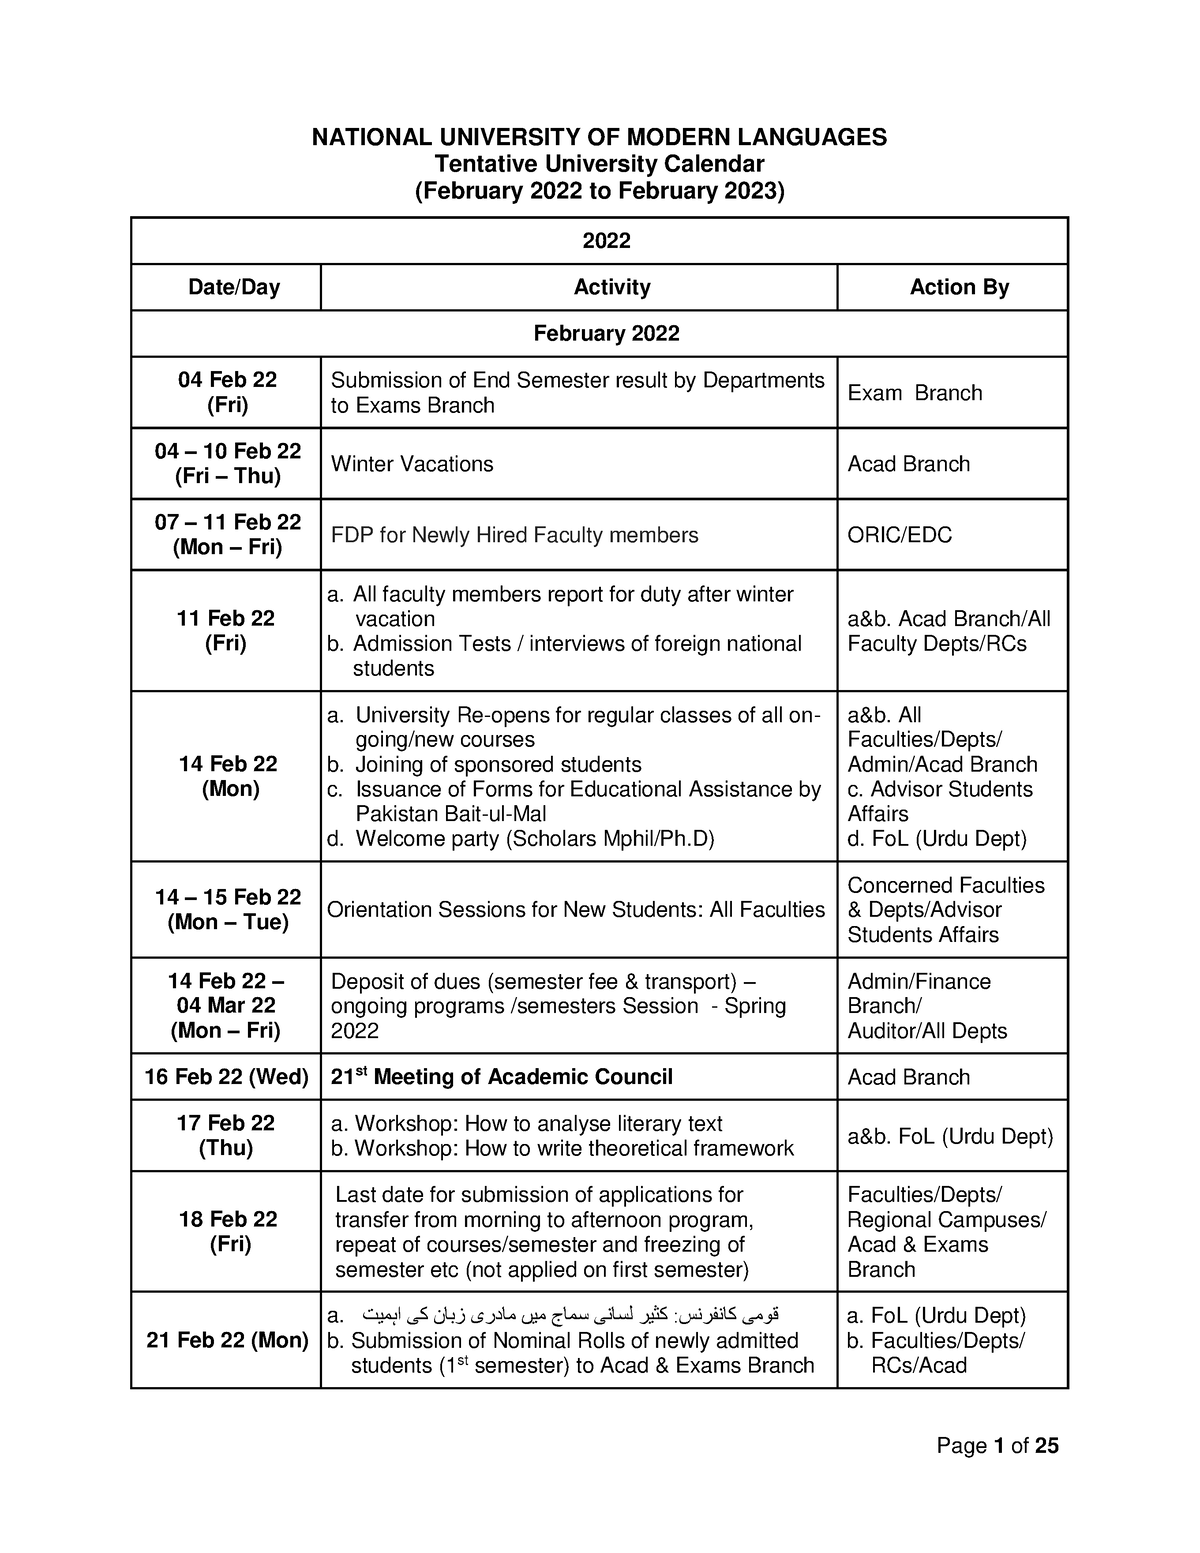 academic-calendar-february-2022-to-february-2023-calendar-national